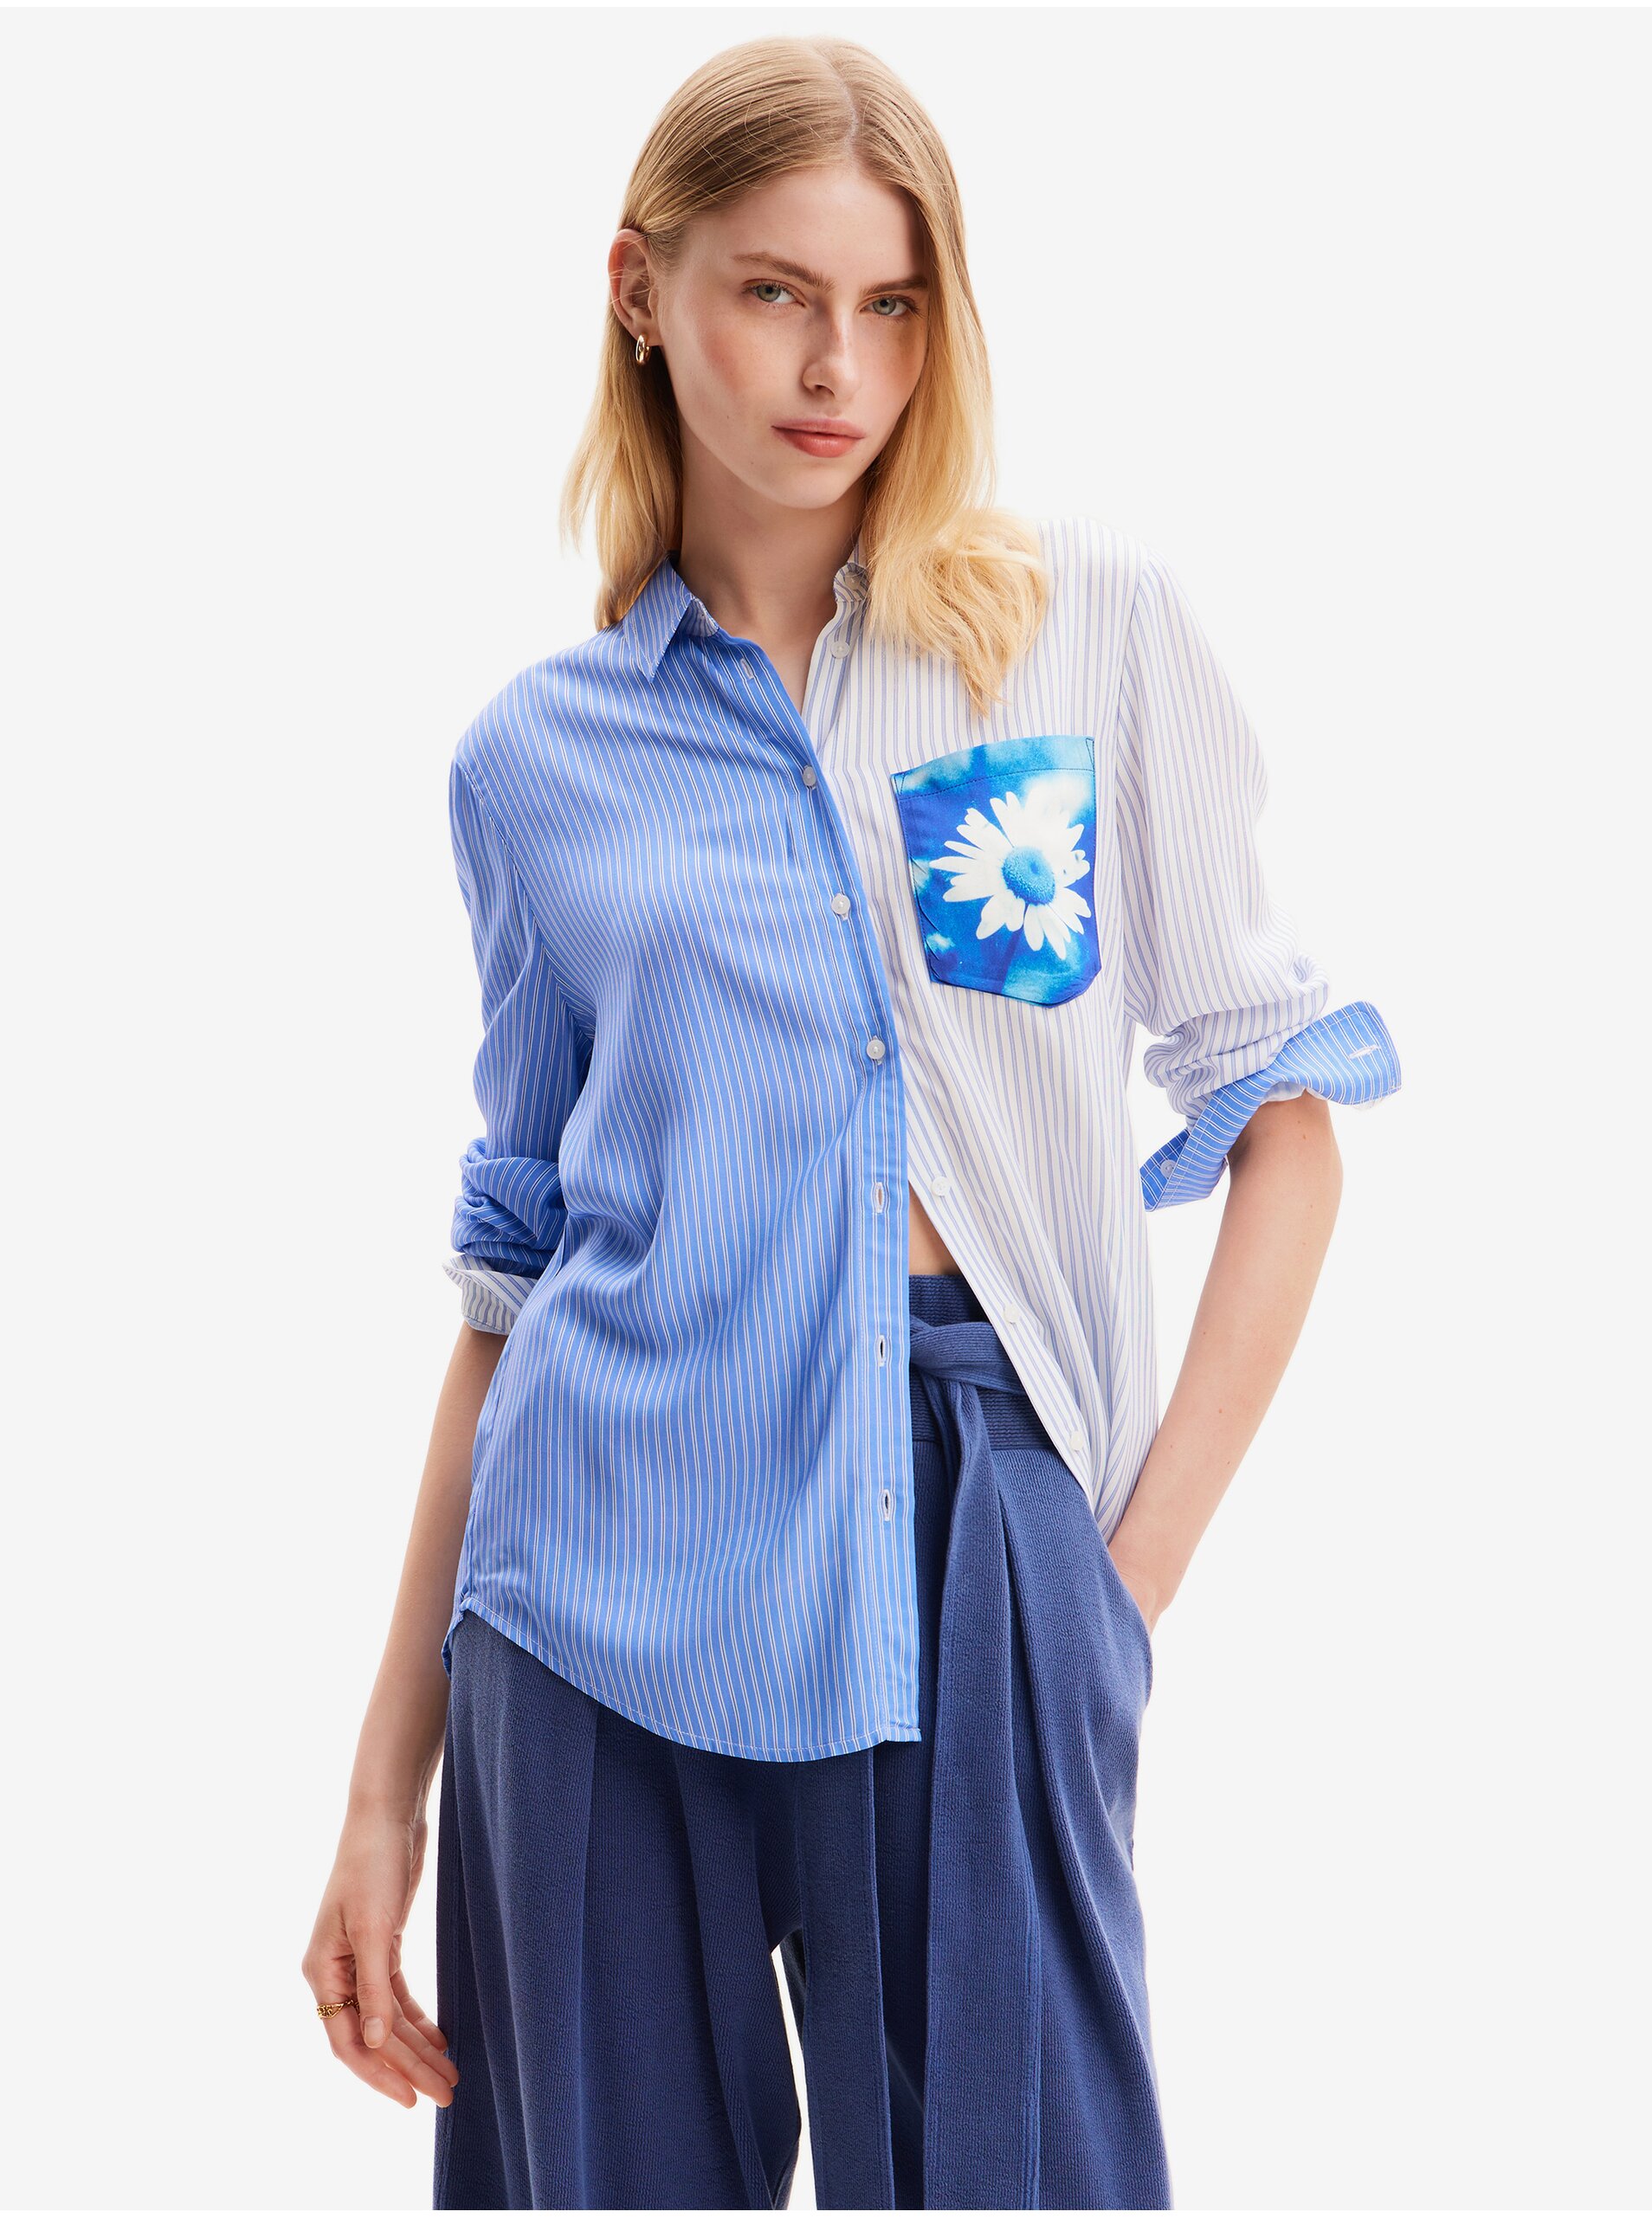 Women's White and Blue Striped Shirt Desigual Flower Pocket - Women